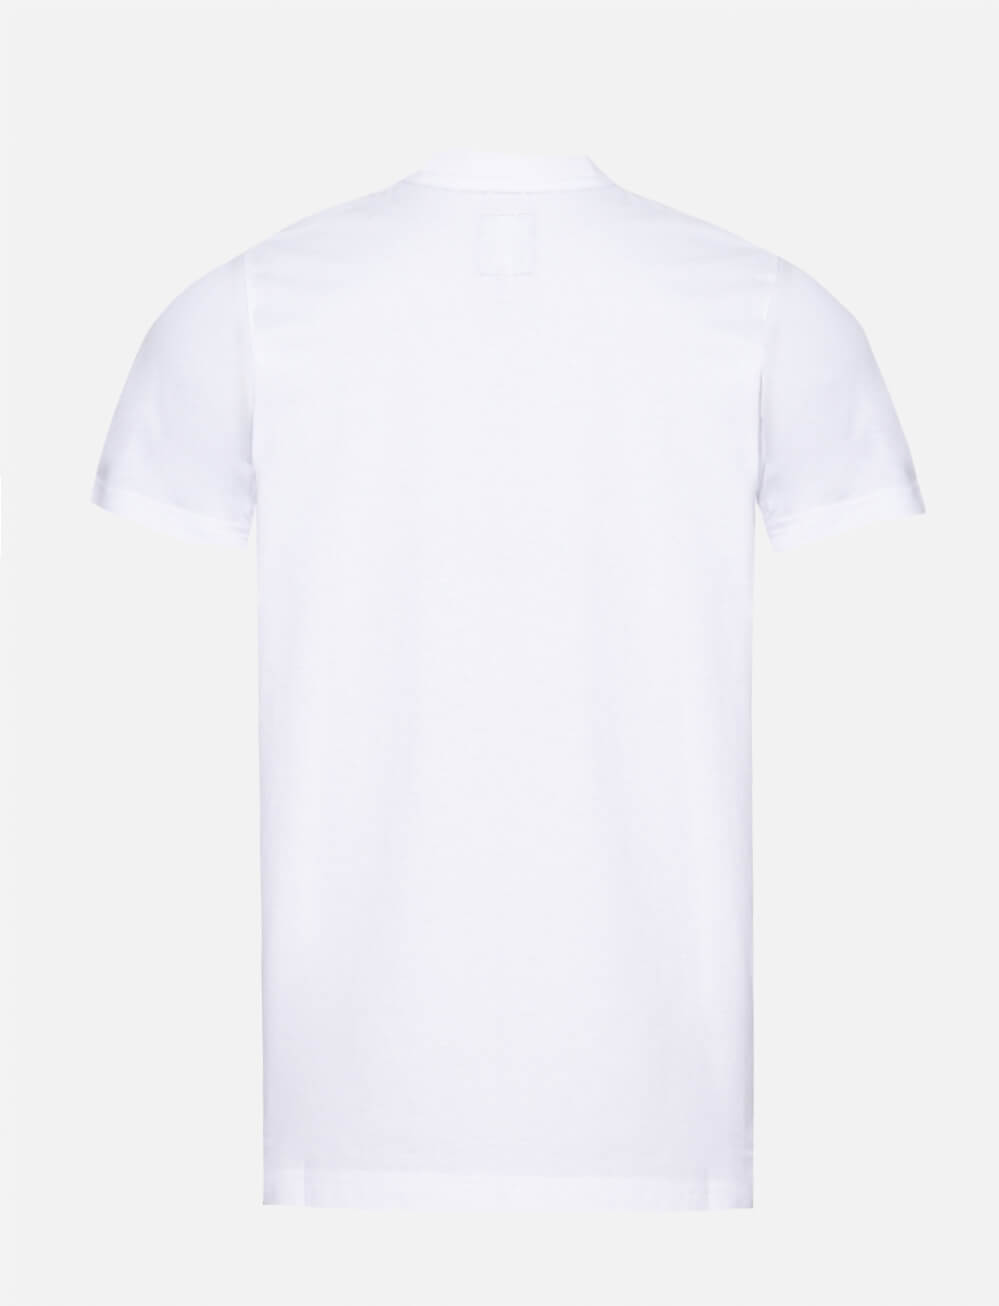 SVNS Madrid Event T-Shirt - White